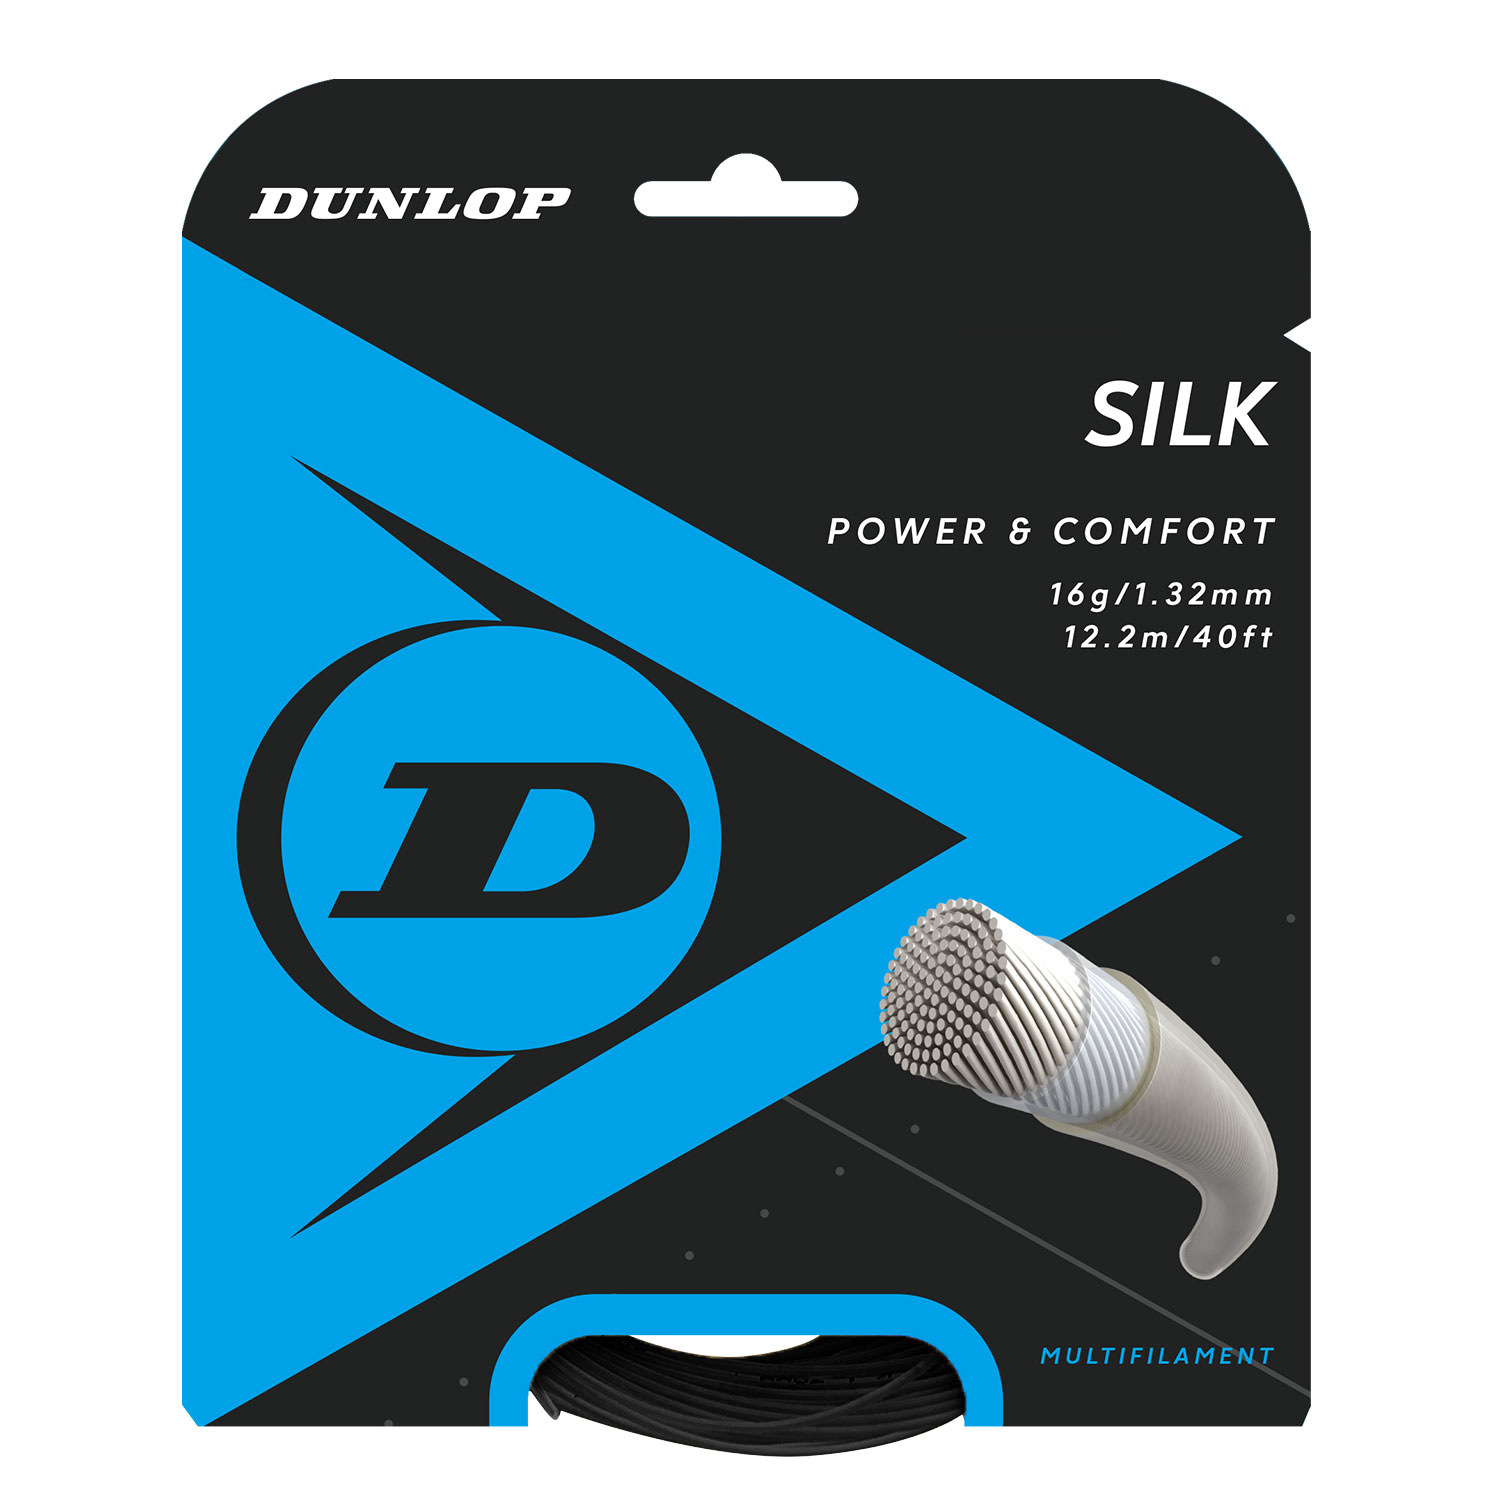 Dunlop Silk 1.32 Corde da Tennis Multifilamento - nero